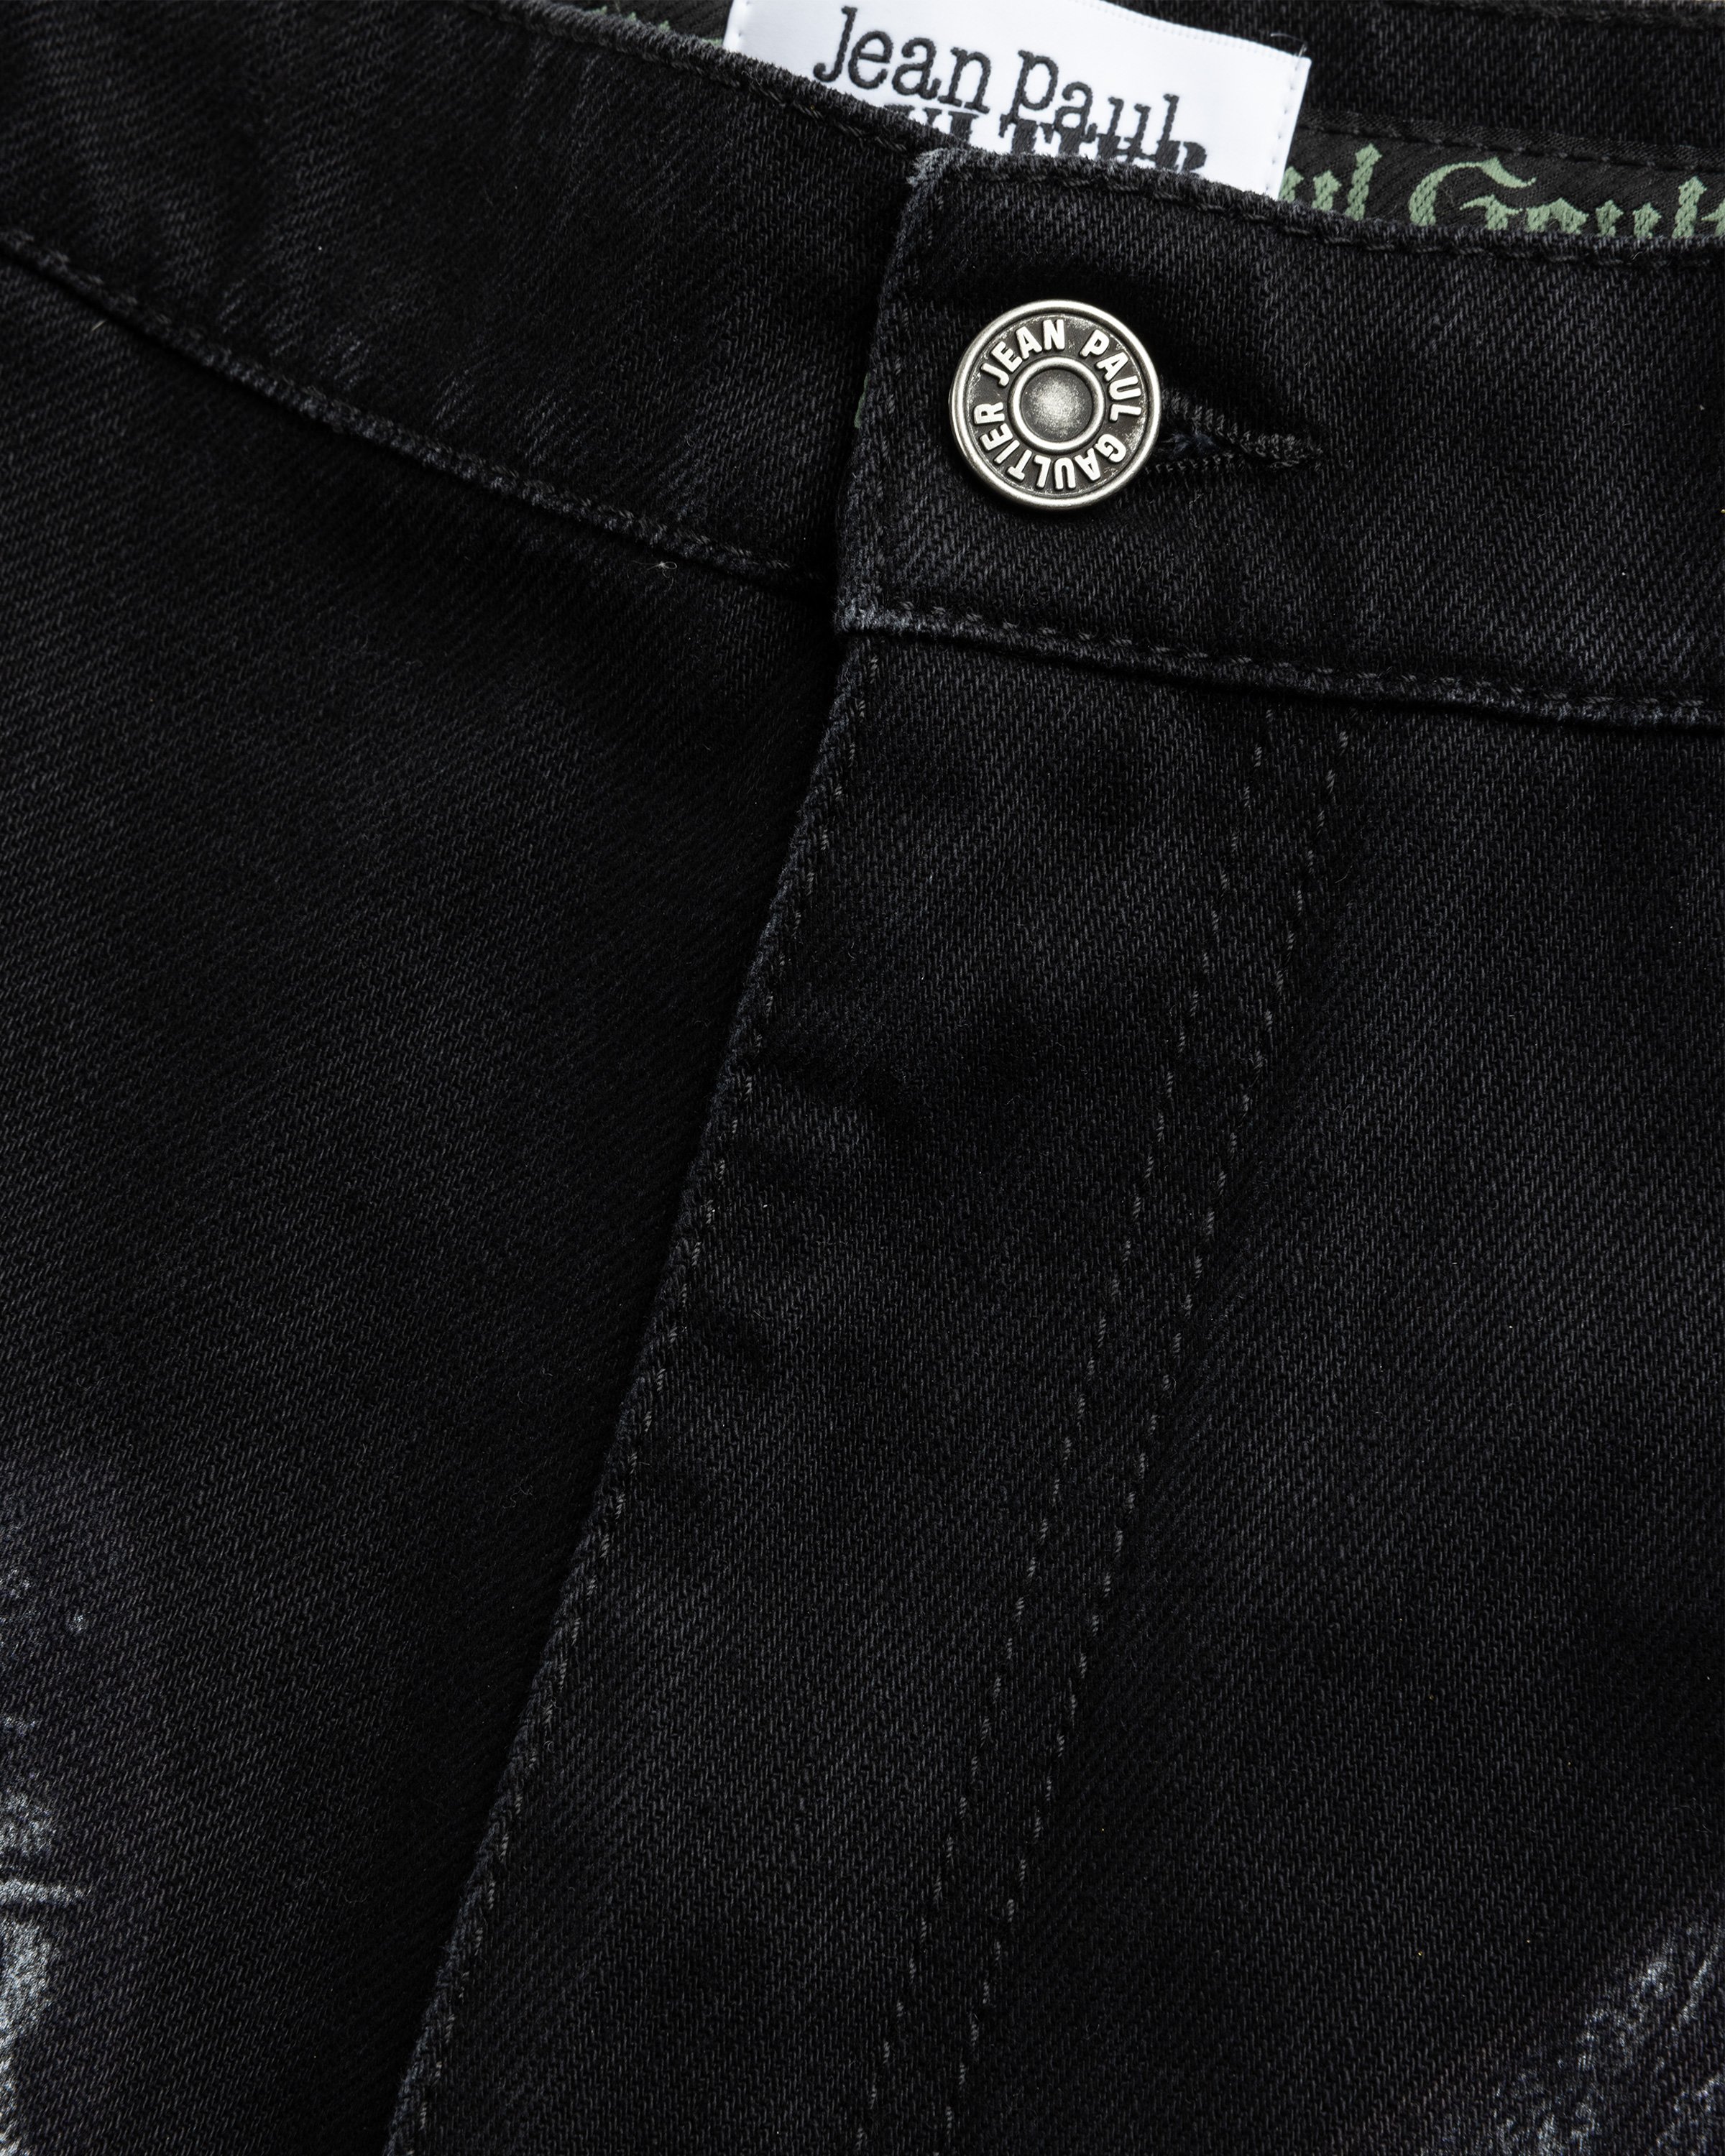 Jean Paul Gaultier - Denim Trompe L'oeil Jeans Black/Gray - Clothing - Black - Image 5